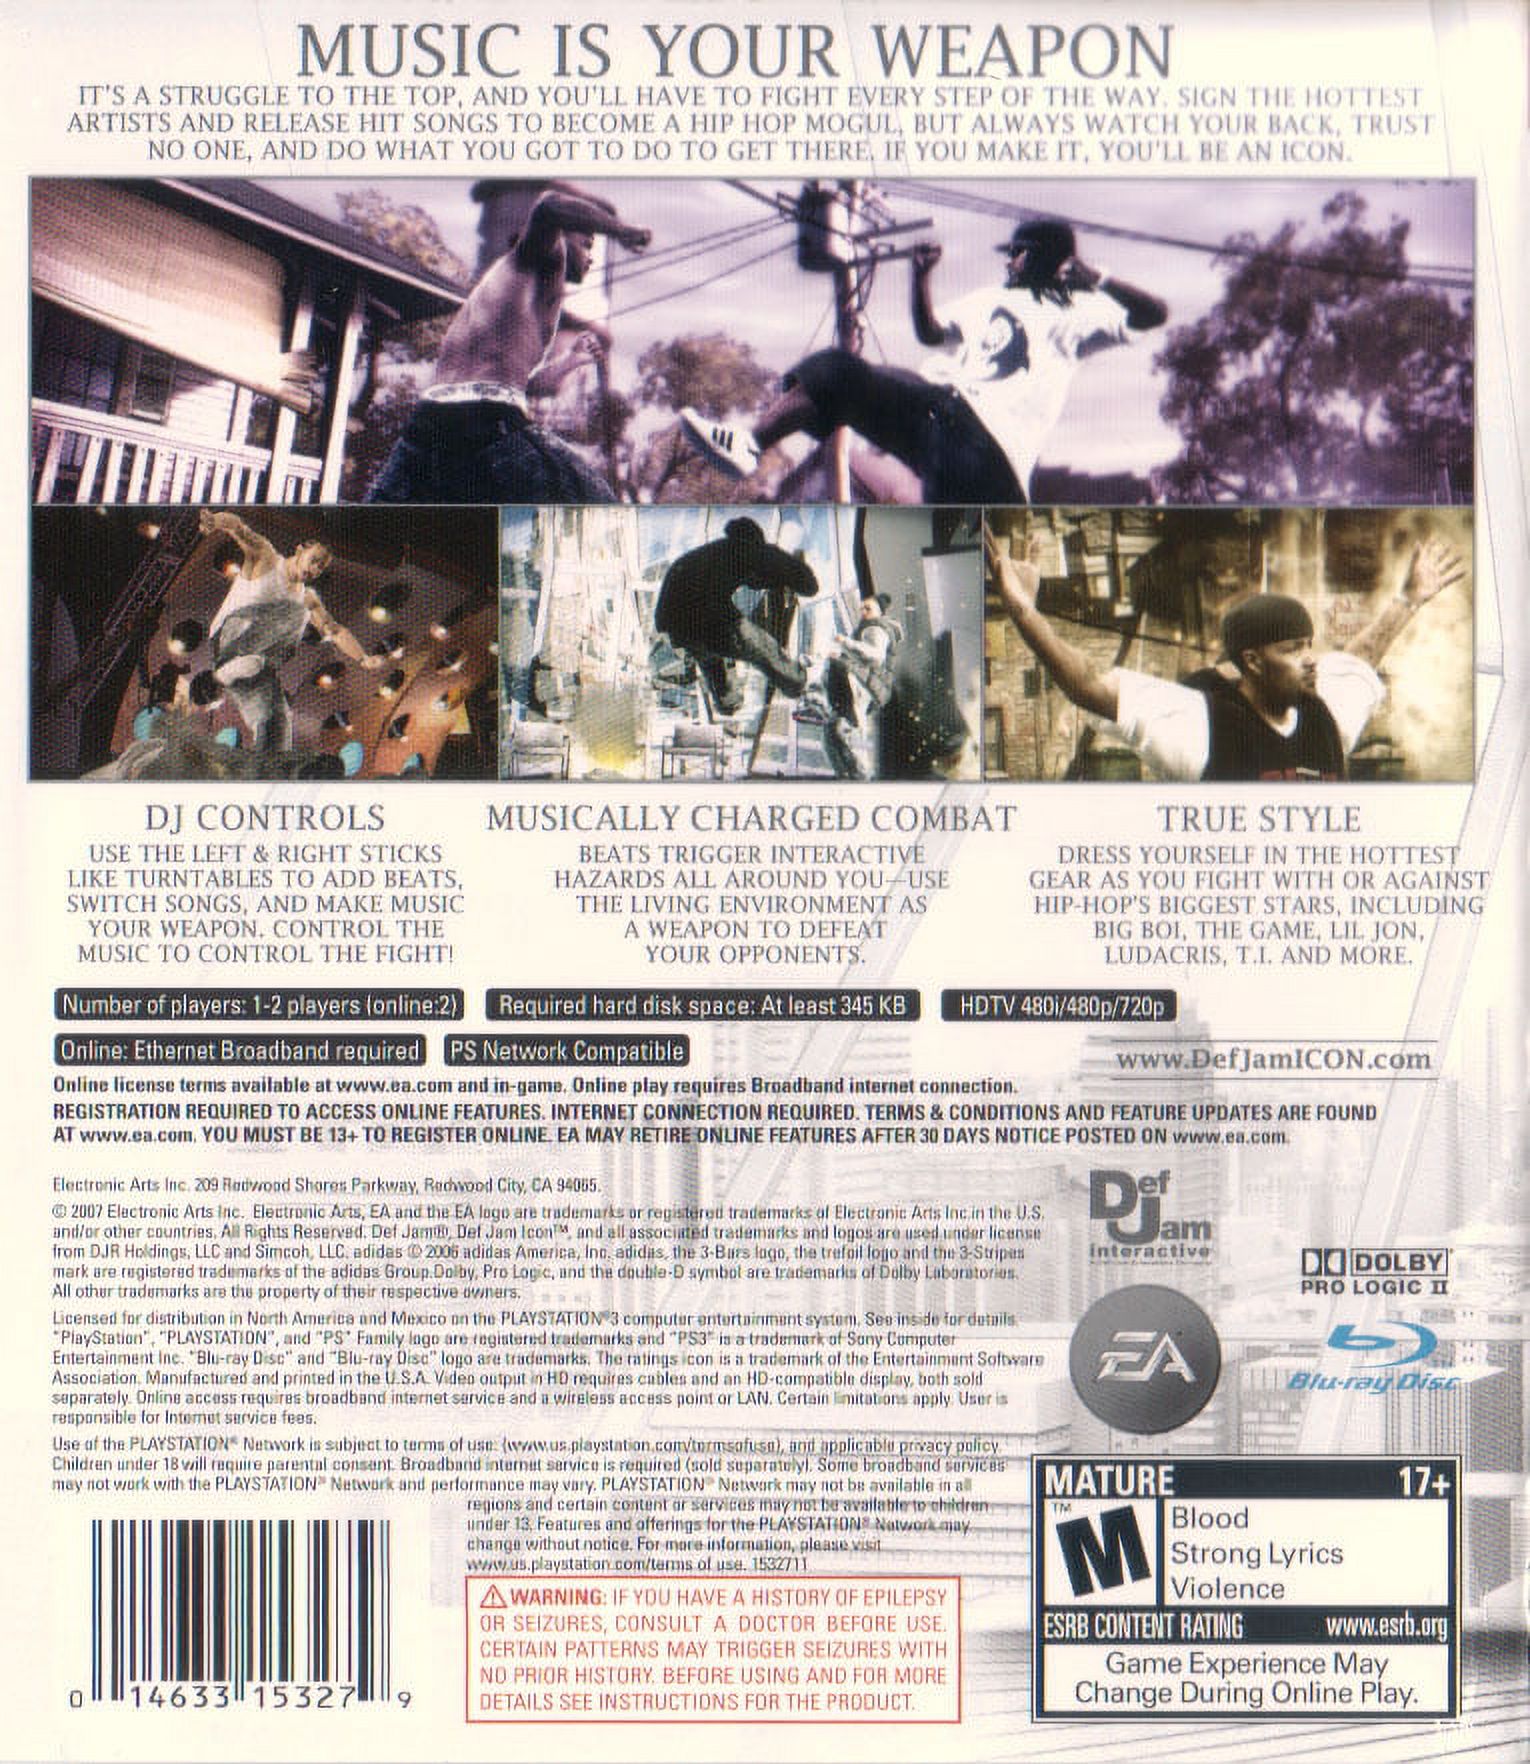 DEF JAM ICON - PlayStation 3